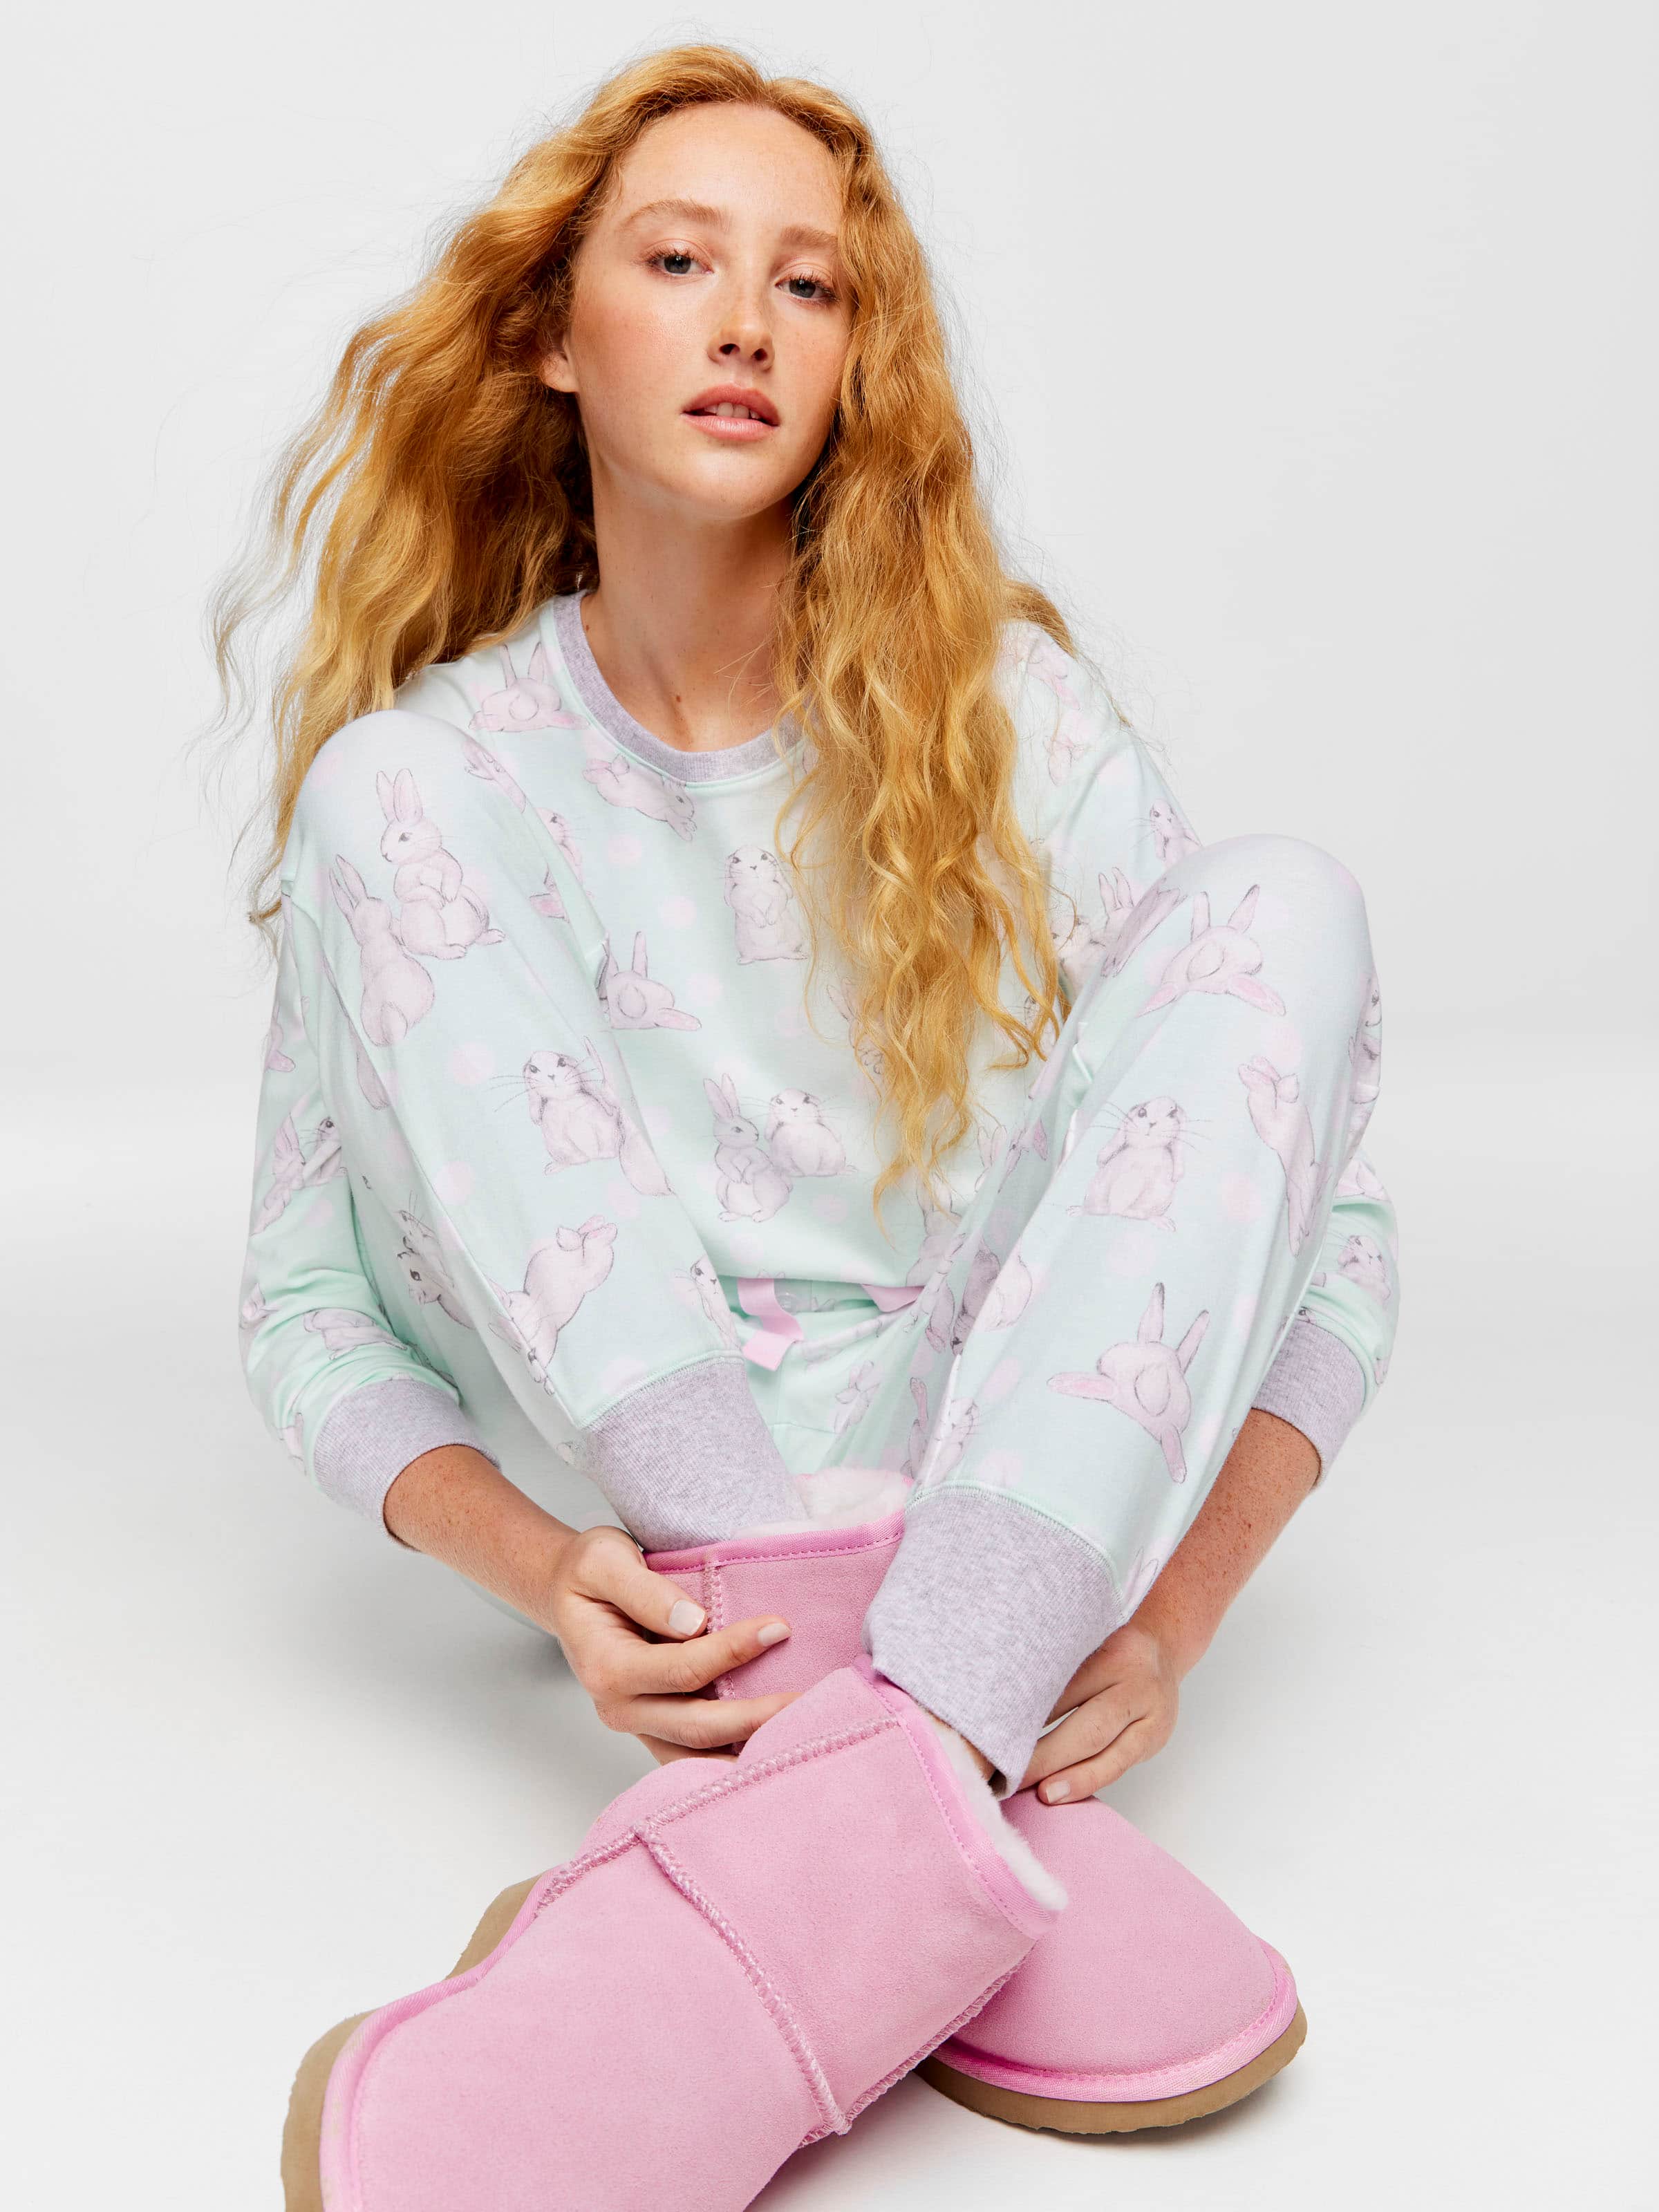 Women's Pyjama Pants - Shop New PJ Pants